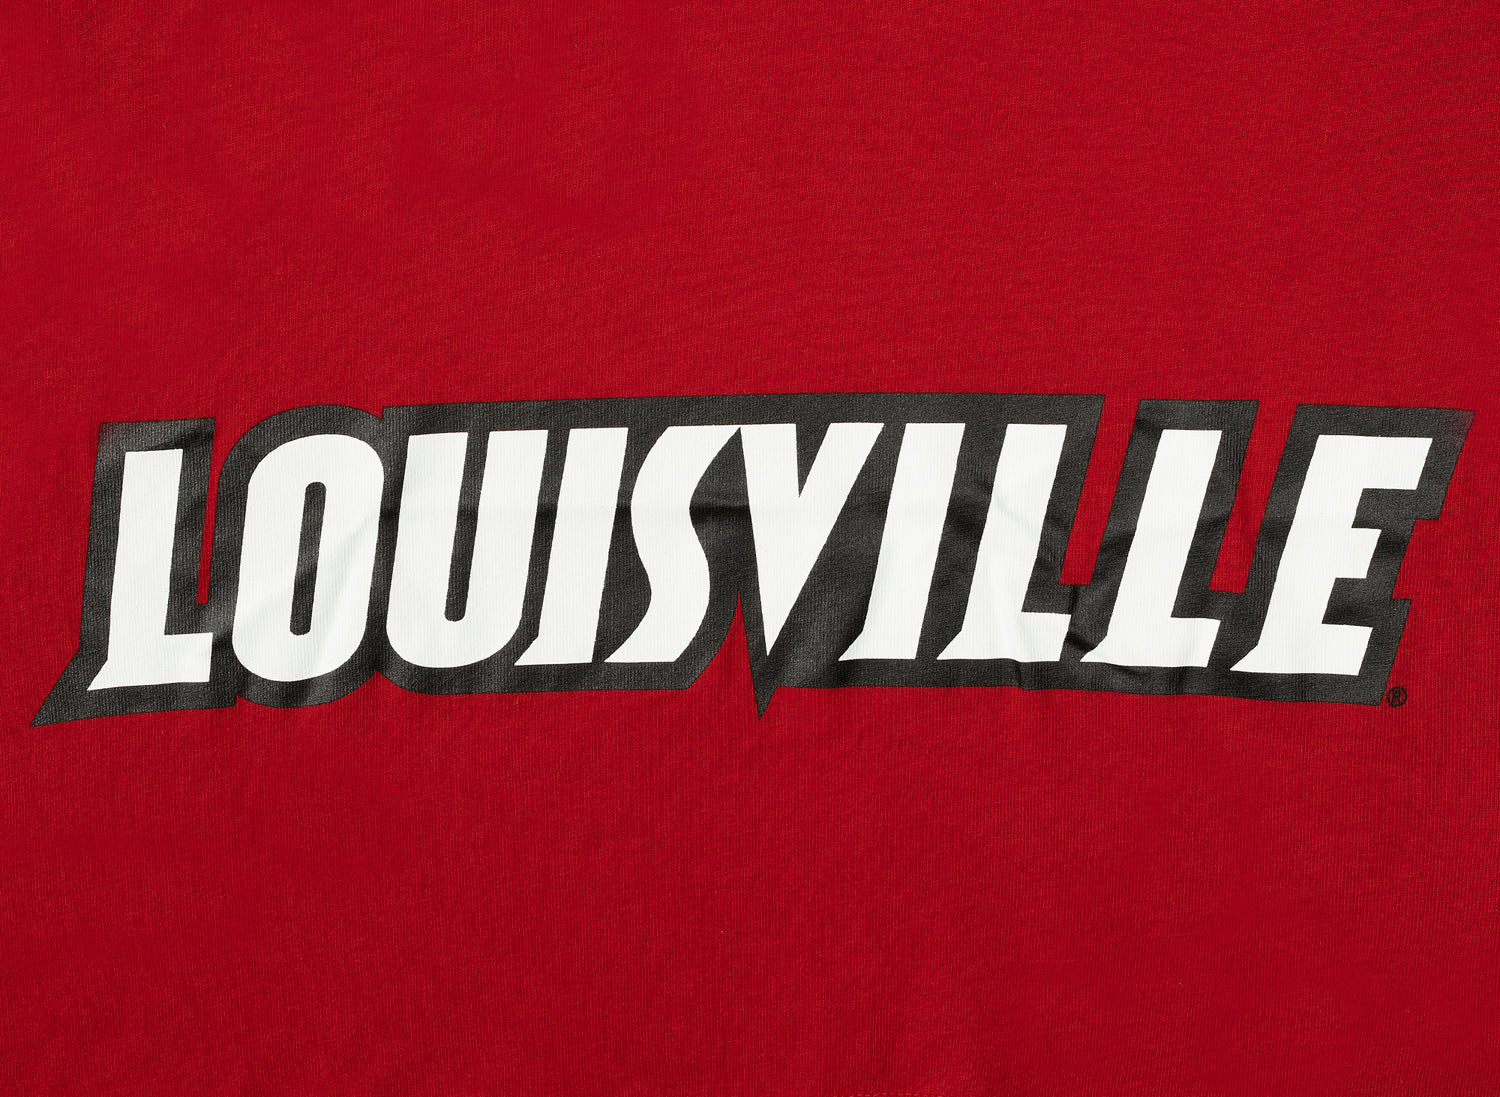 University of Louisville adidas T-Shirts, Louisville Cardinals Tees, T-Shirt